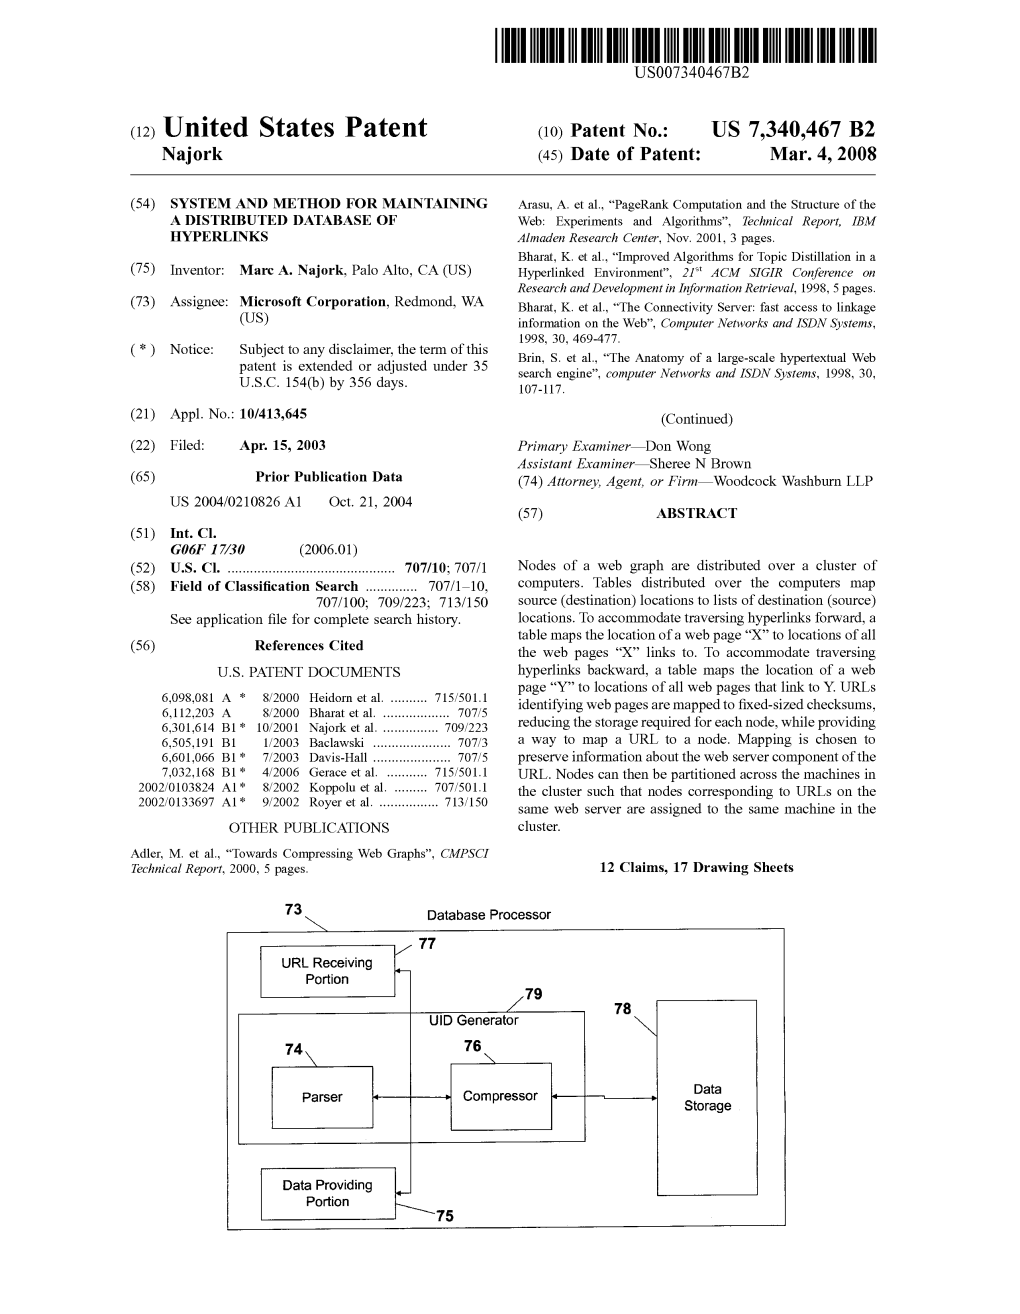 United States Patent (10) Patent No.: US 7,340,467 B2 Najork (45) Date of Patent: Mar